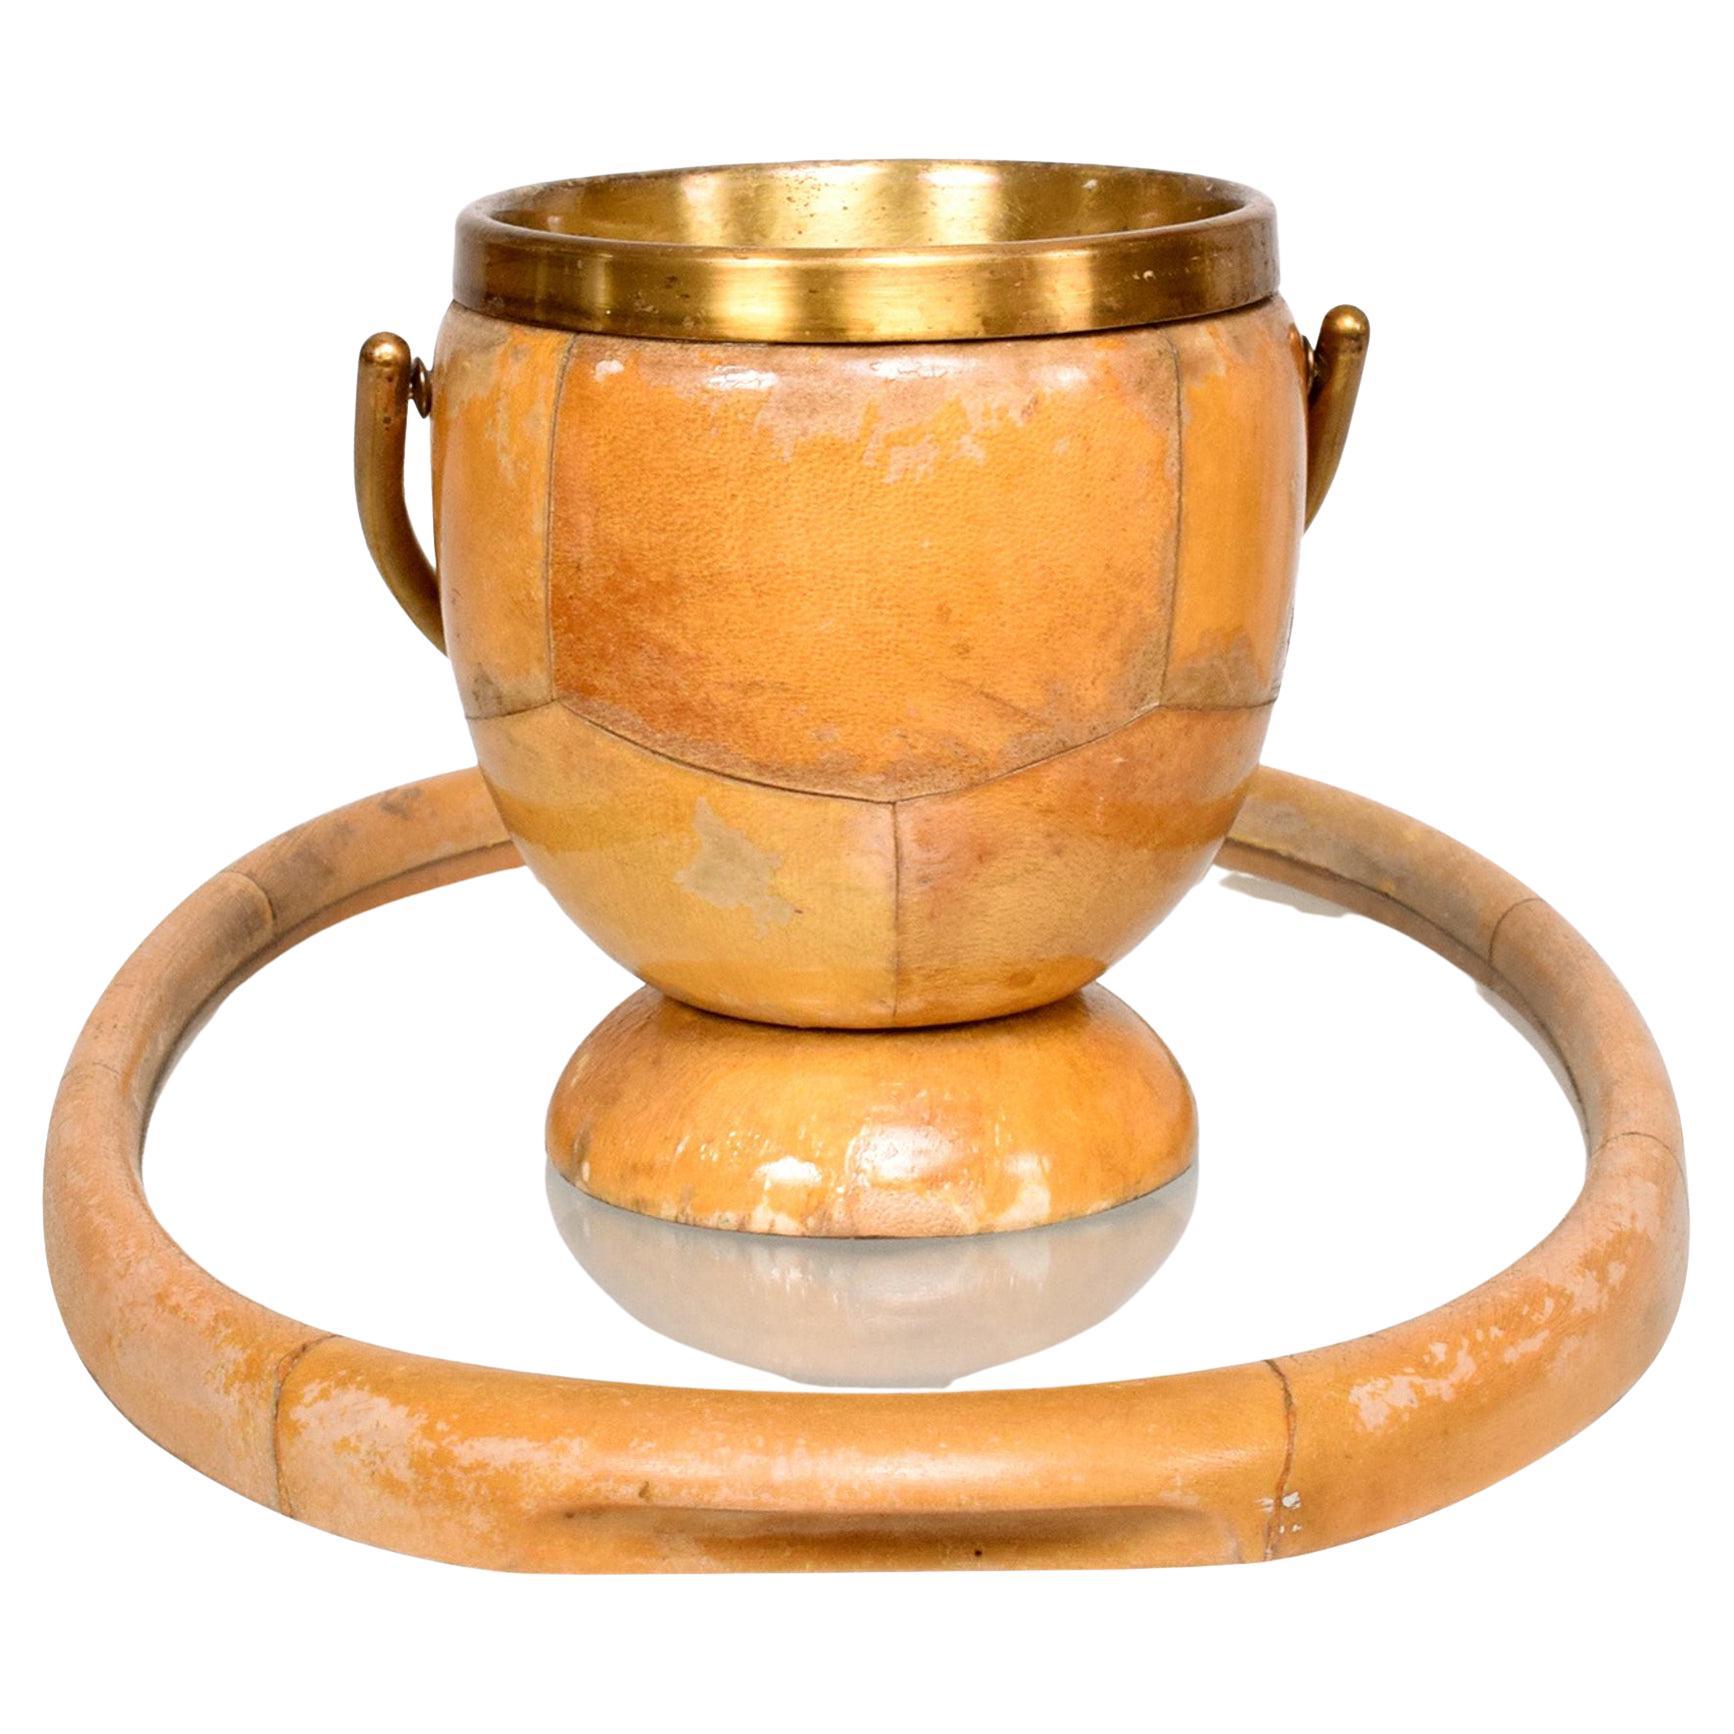 Aldo Tura Barware Set Ice Bucket and Serving Tray Goatskin and Brass 1950s Italy